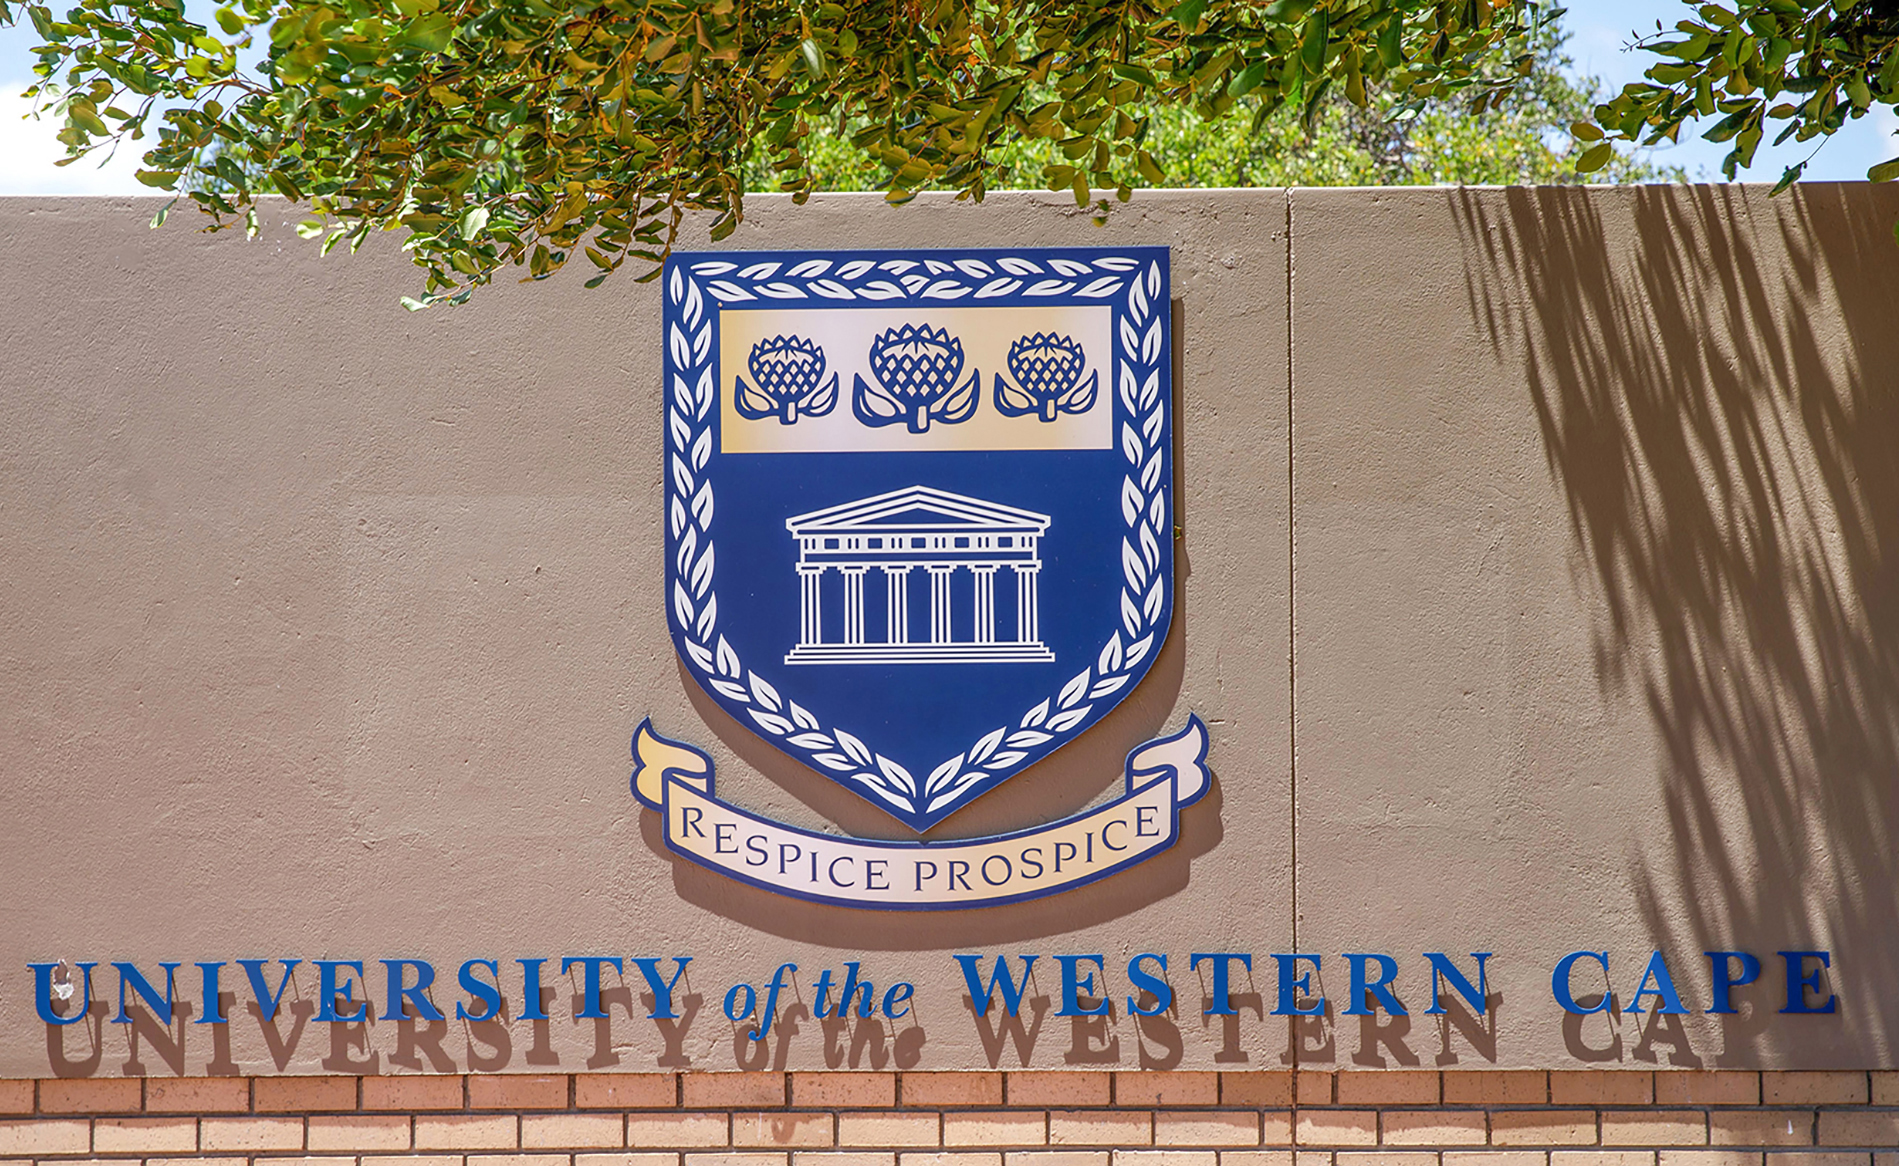 The University of Western Cape, UWC